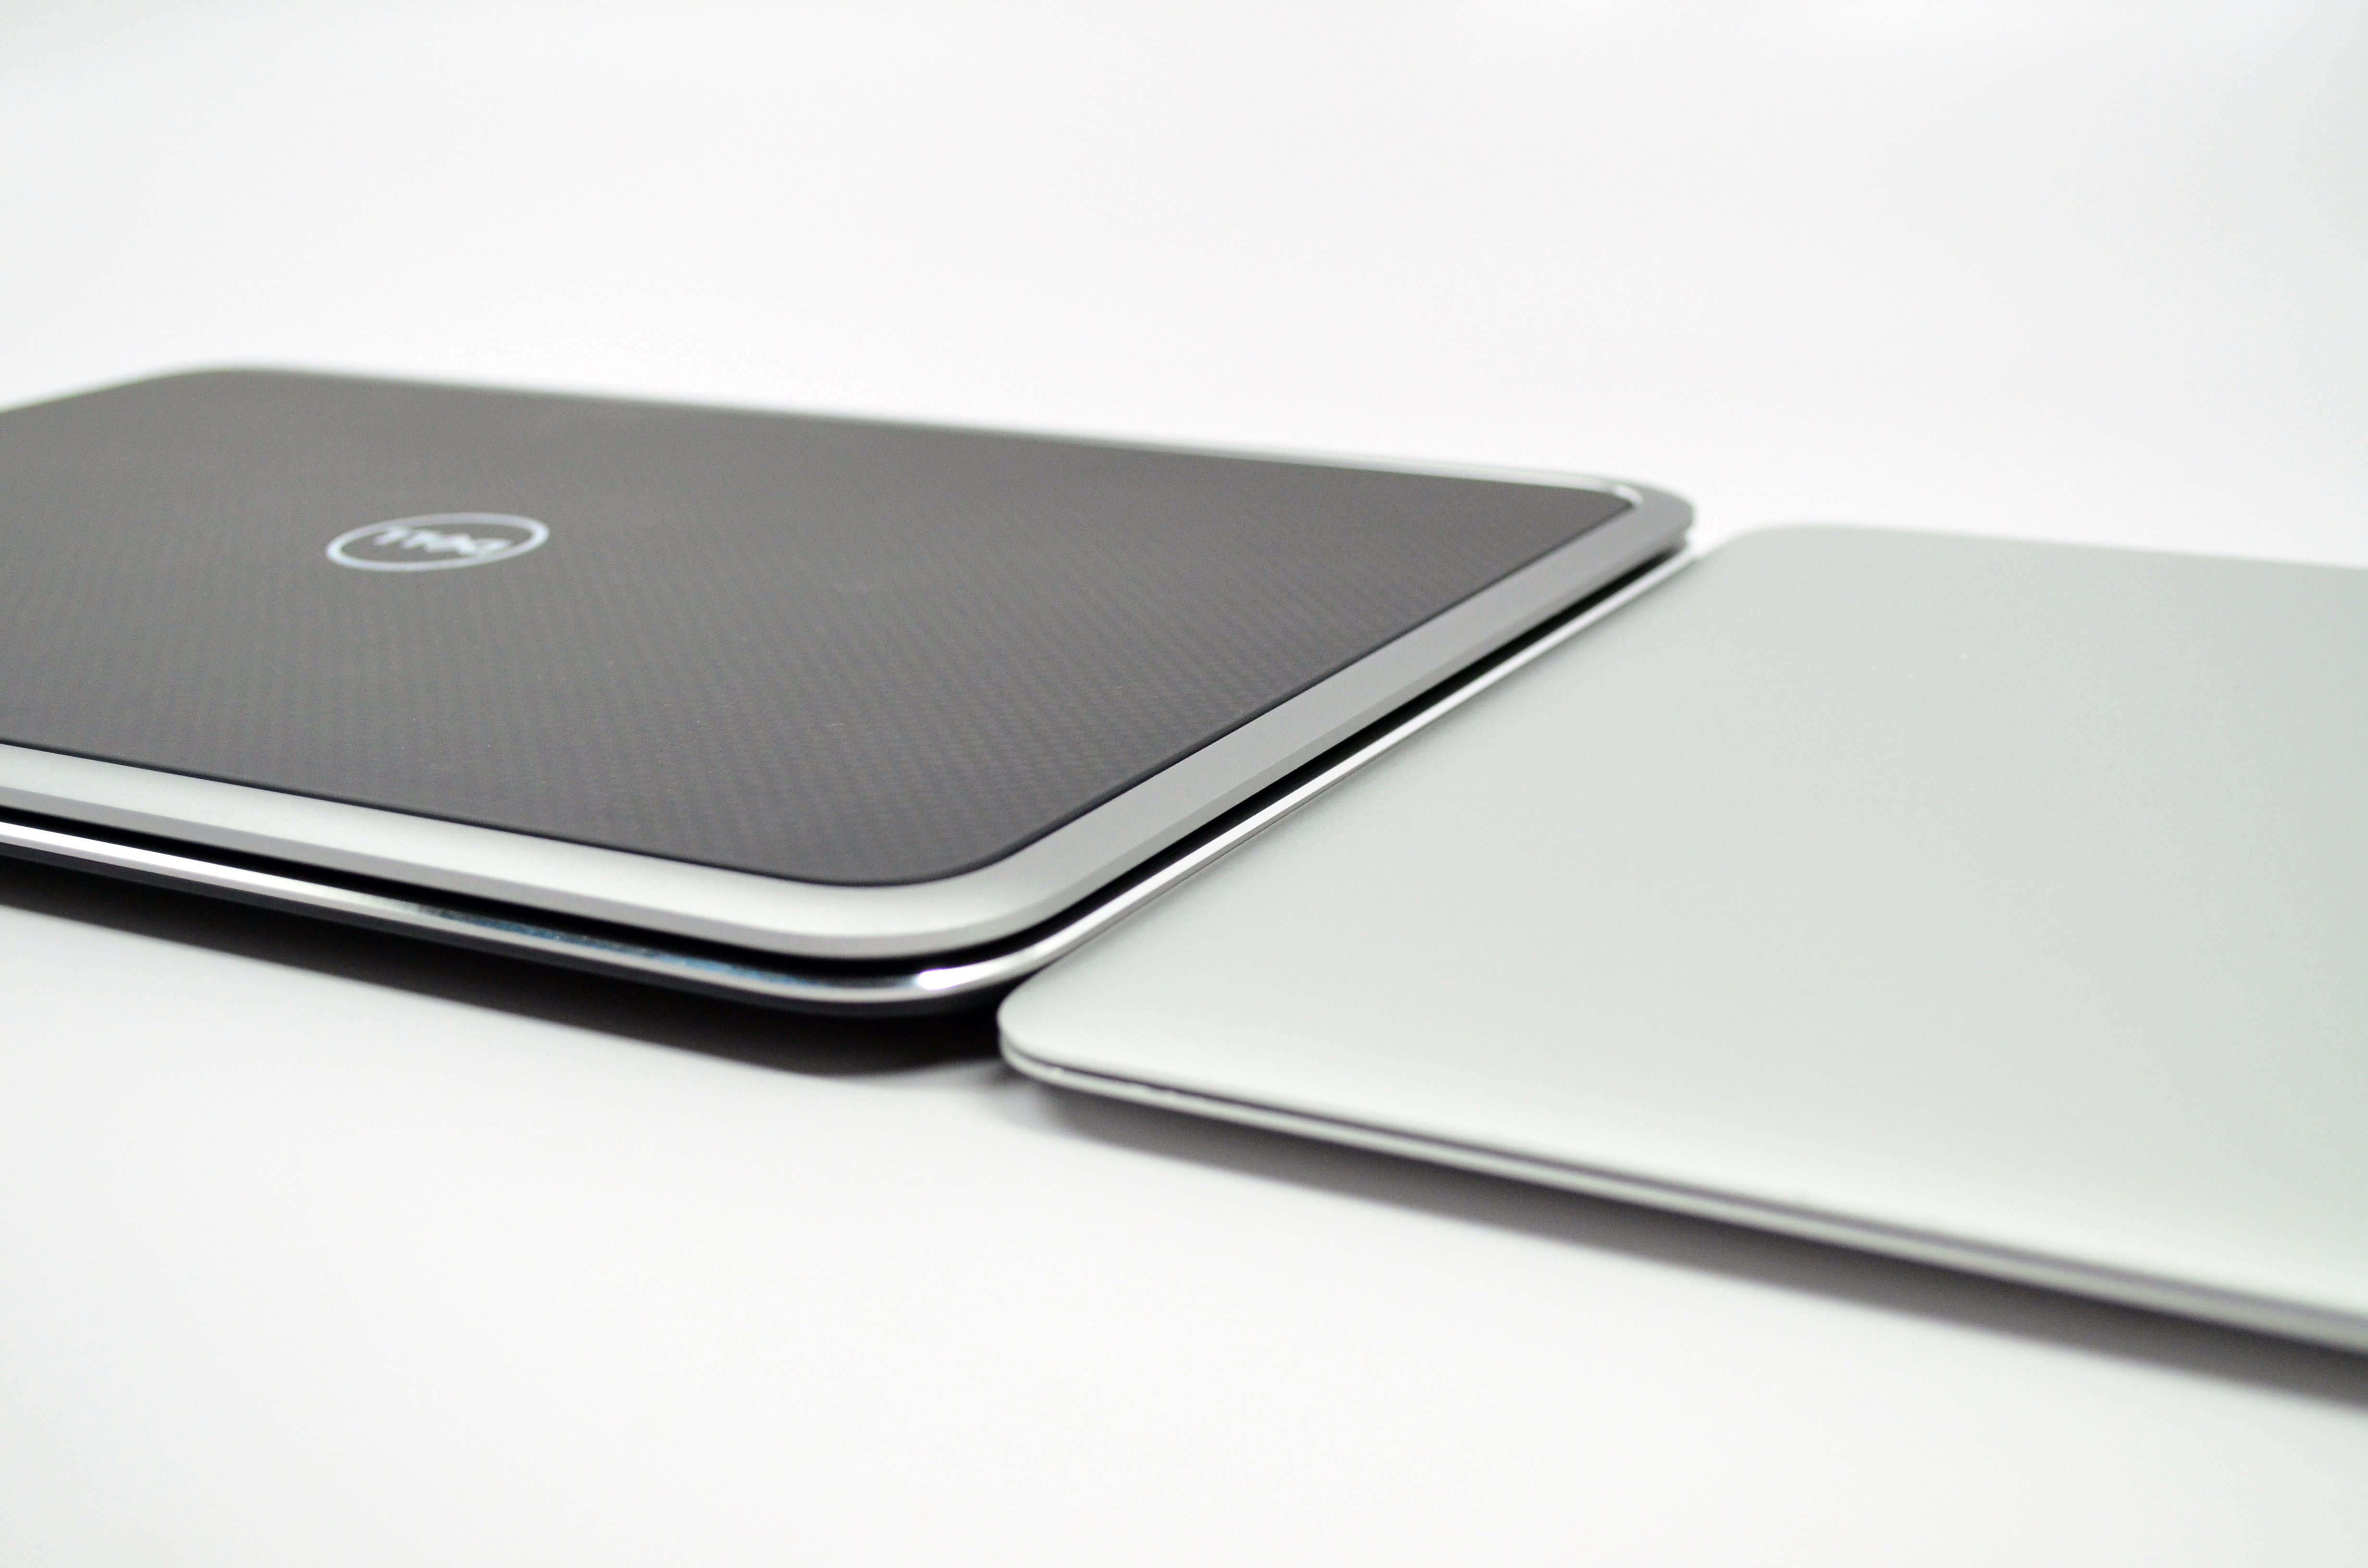 XPS 12 Ultrabook Convertible vs. MacBook Air - 12